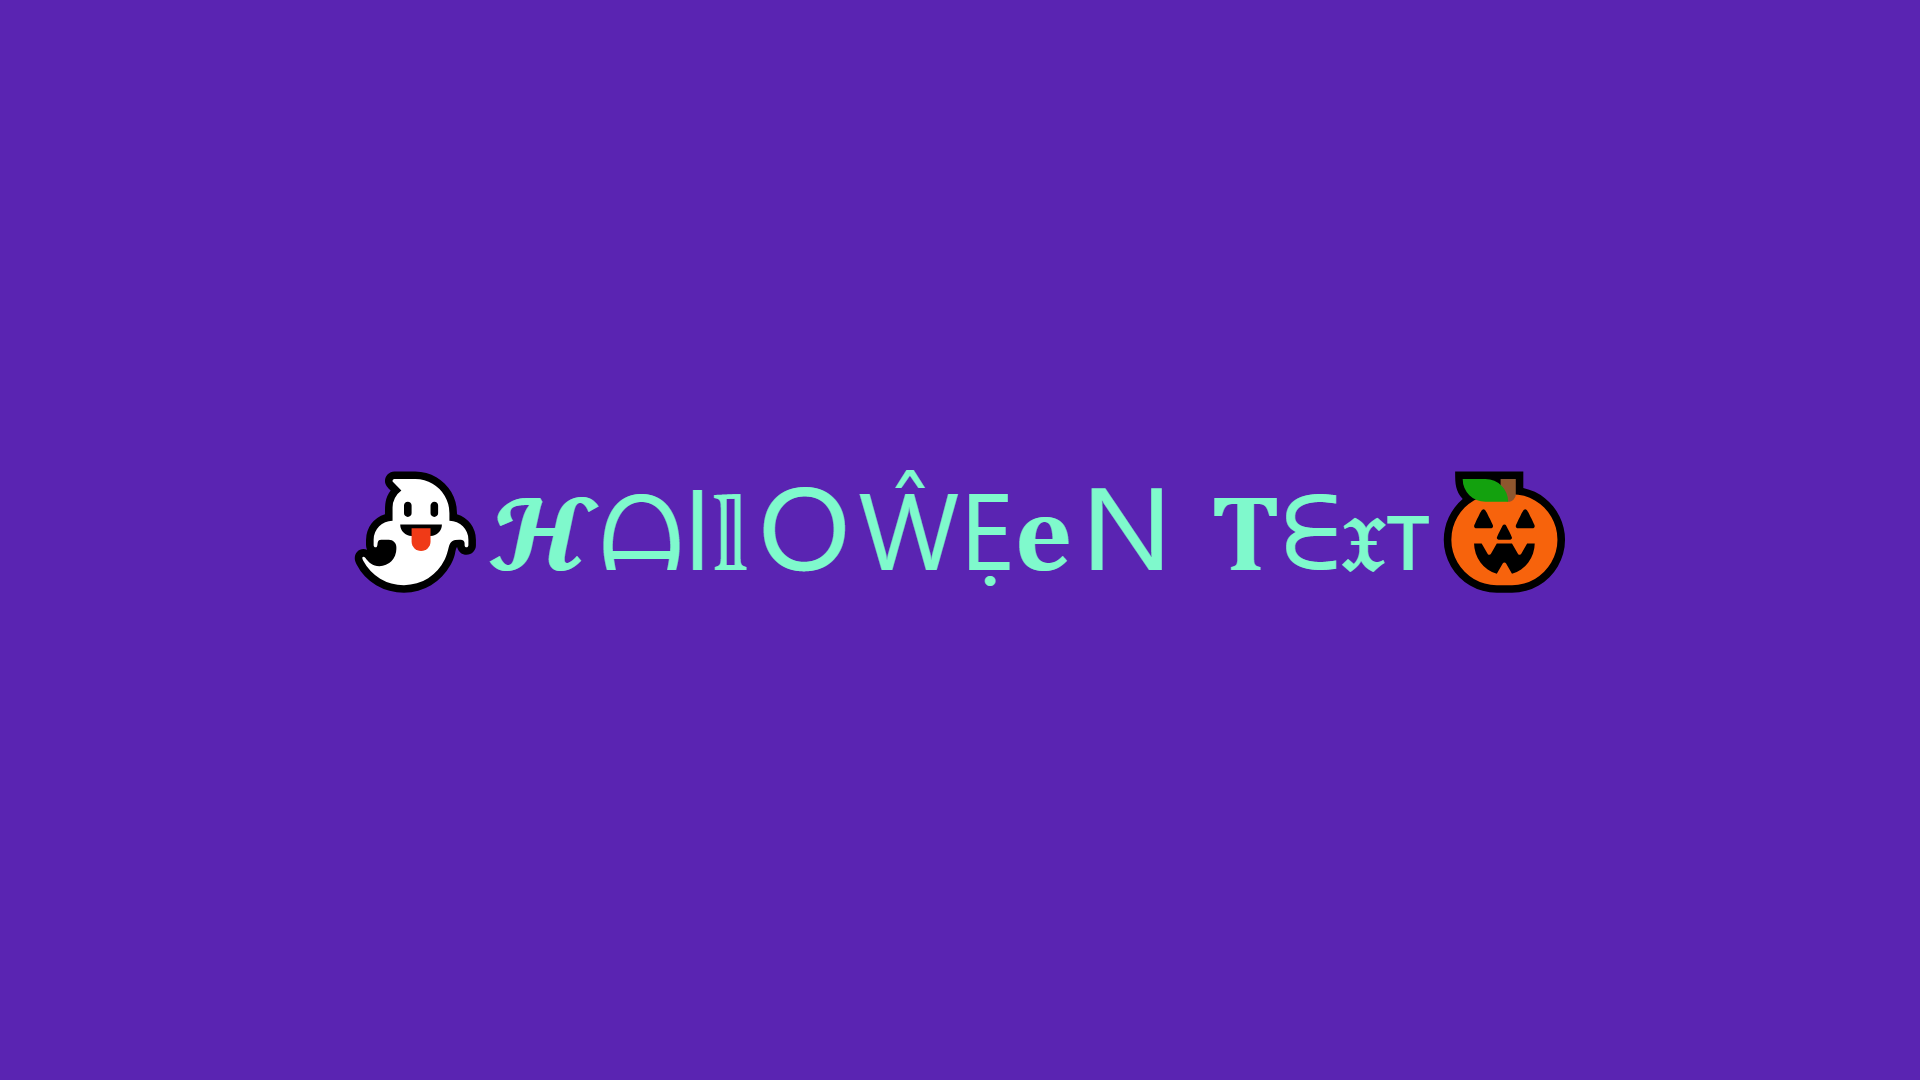 Halloween Font Generator